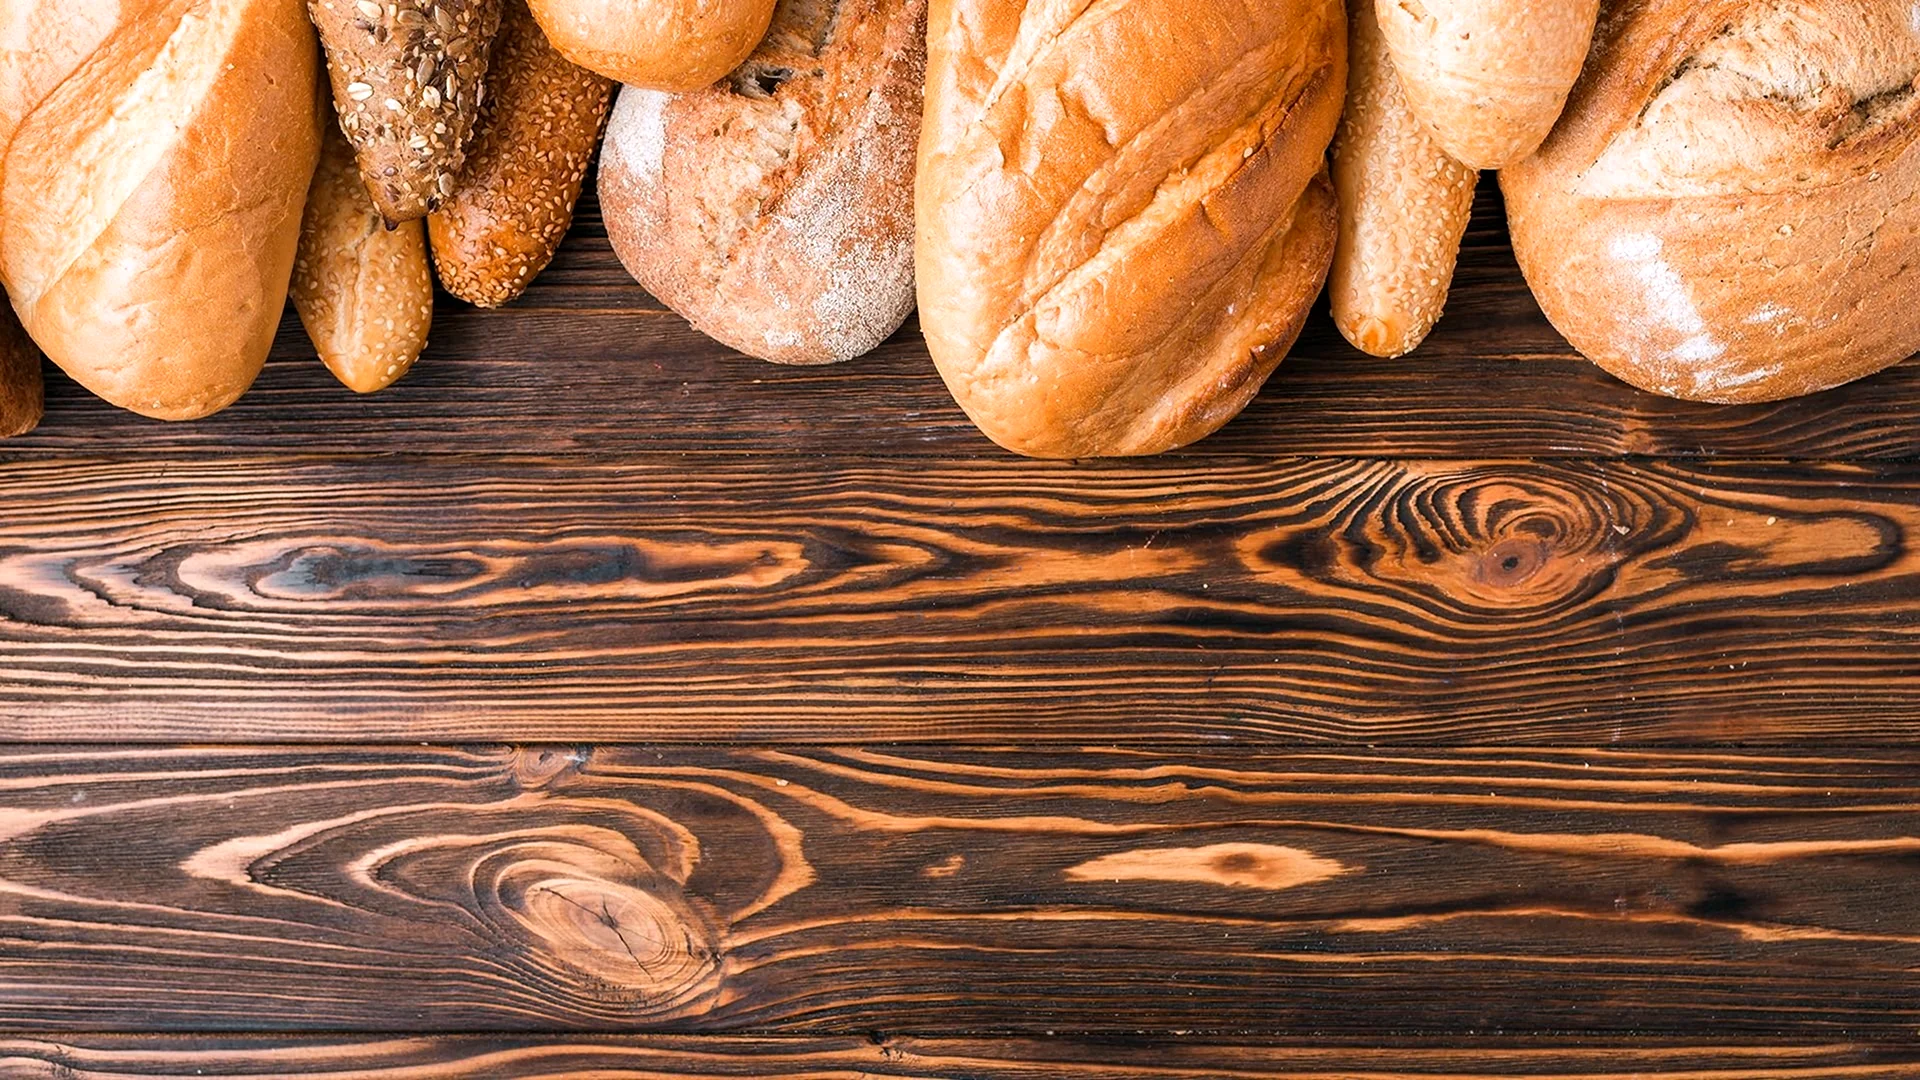 Хлеб на деревянном фоне